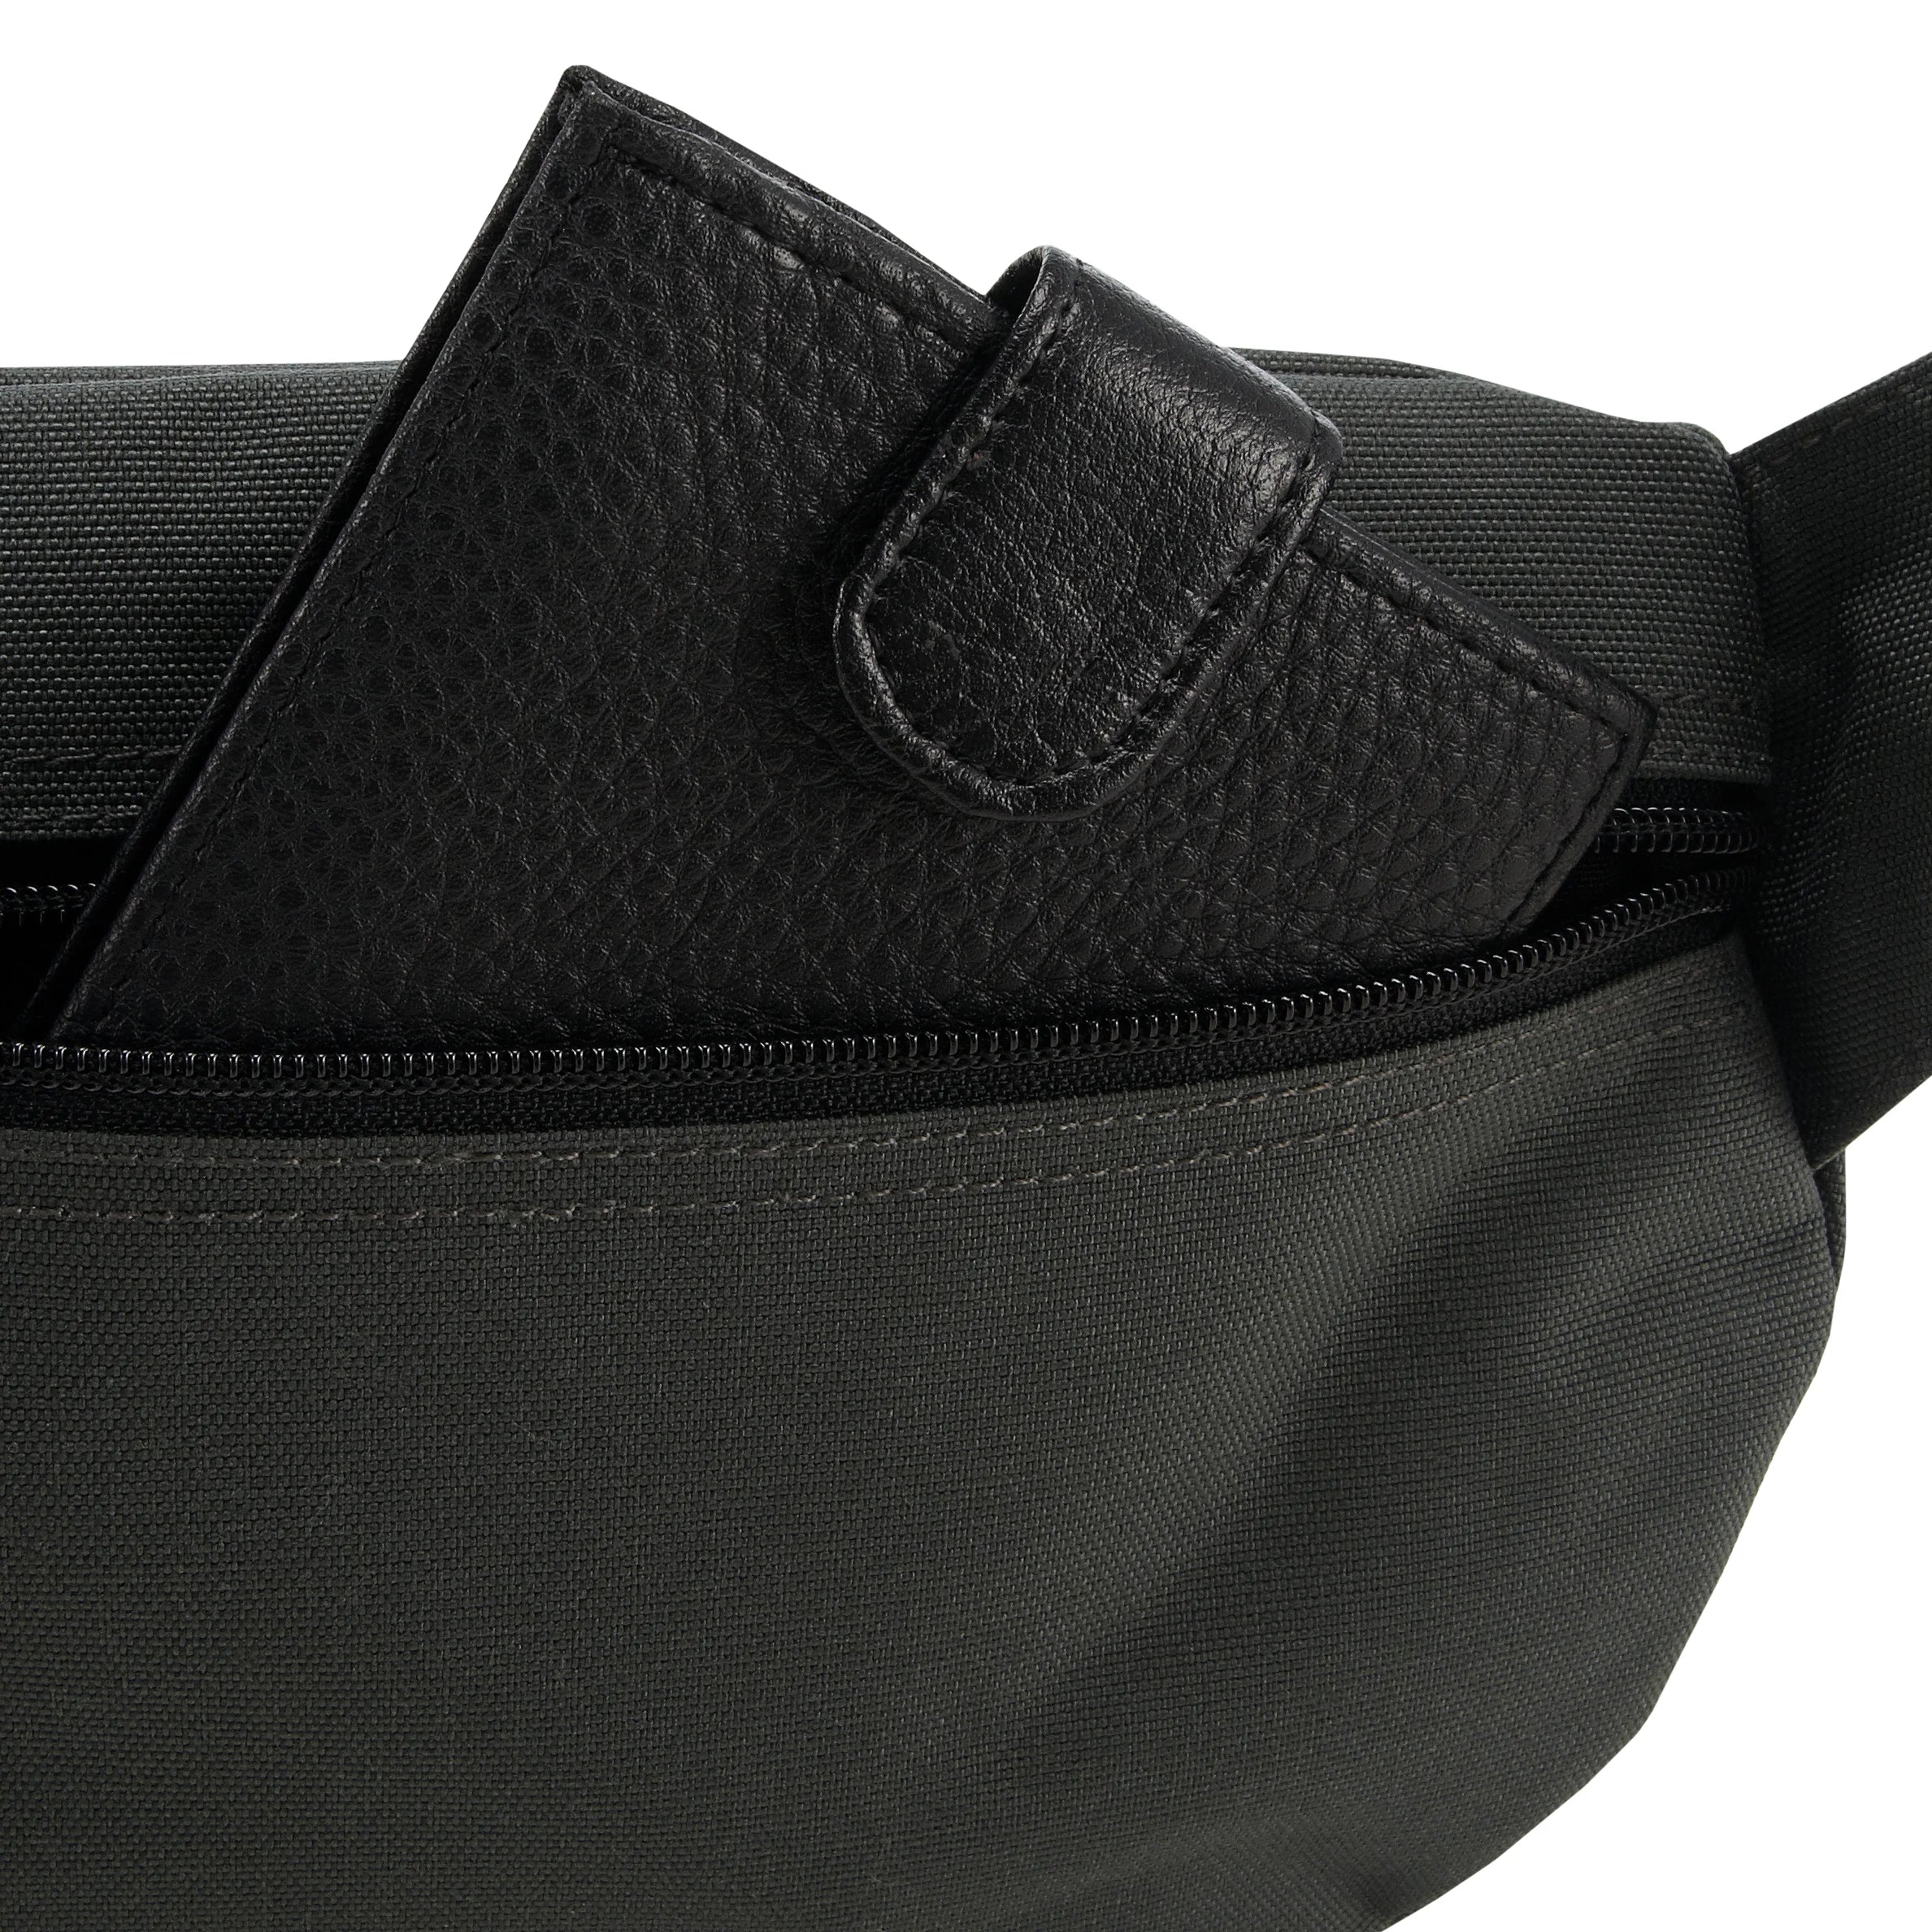 Eastpak Authentic Doggy Bag Gürteltasche 25 cm - black